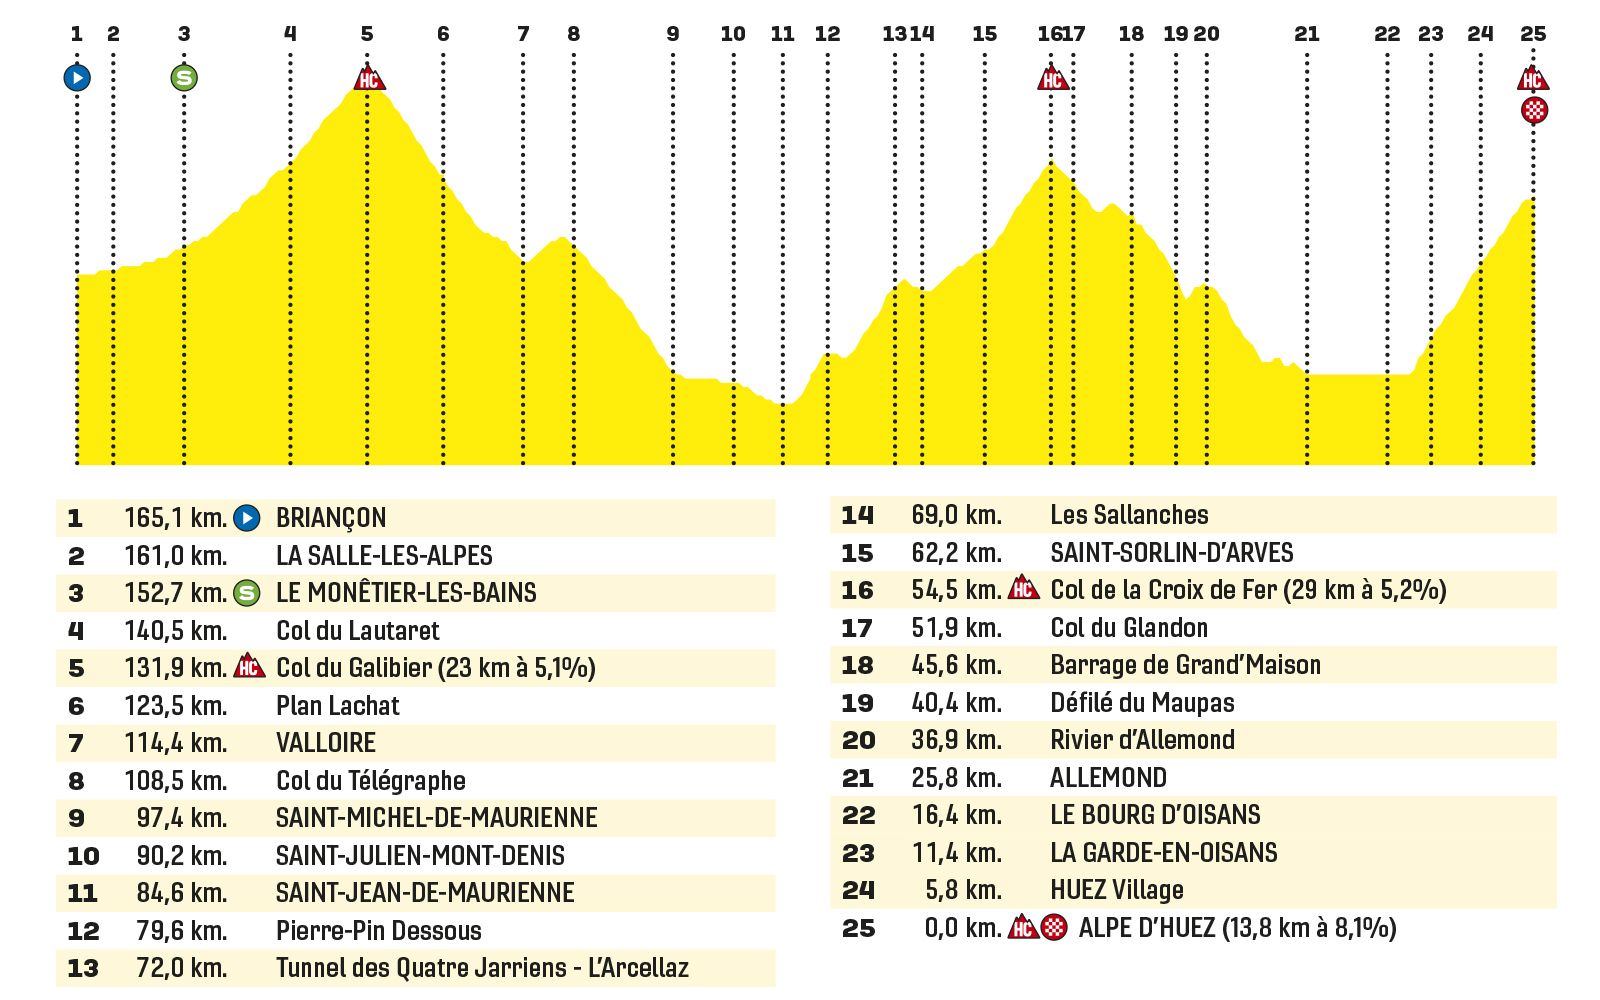 Briançon - Alpe d'Huez  | Routekaart